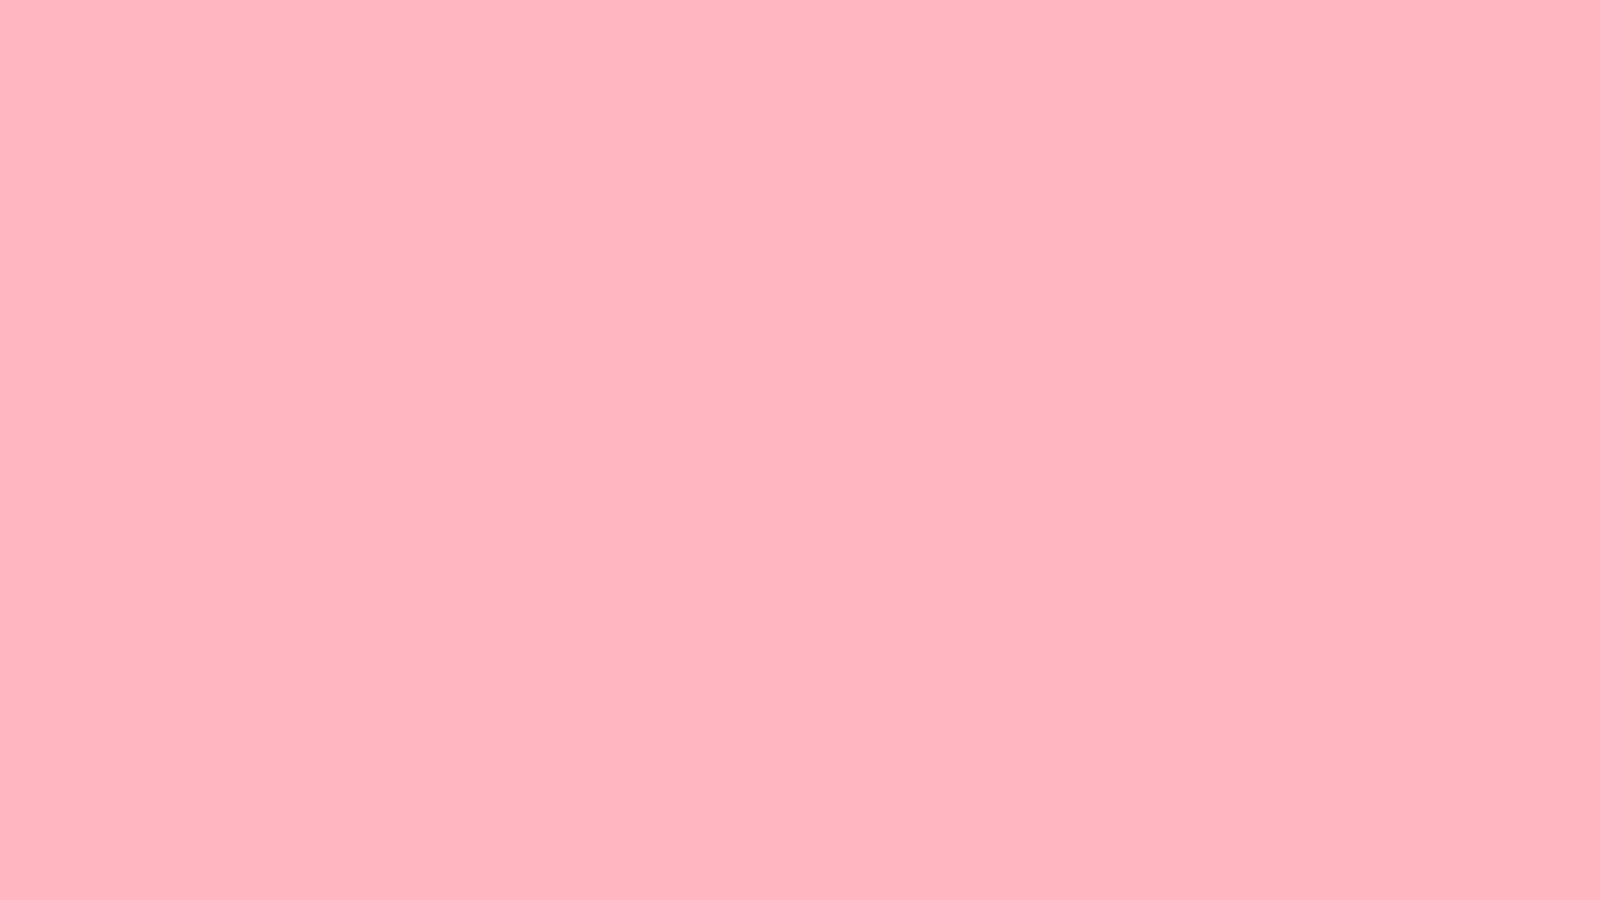 Light Pink Background Hd HD Wallpapers on picsfaircom 1600x900